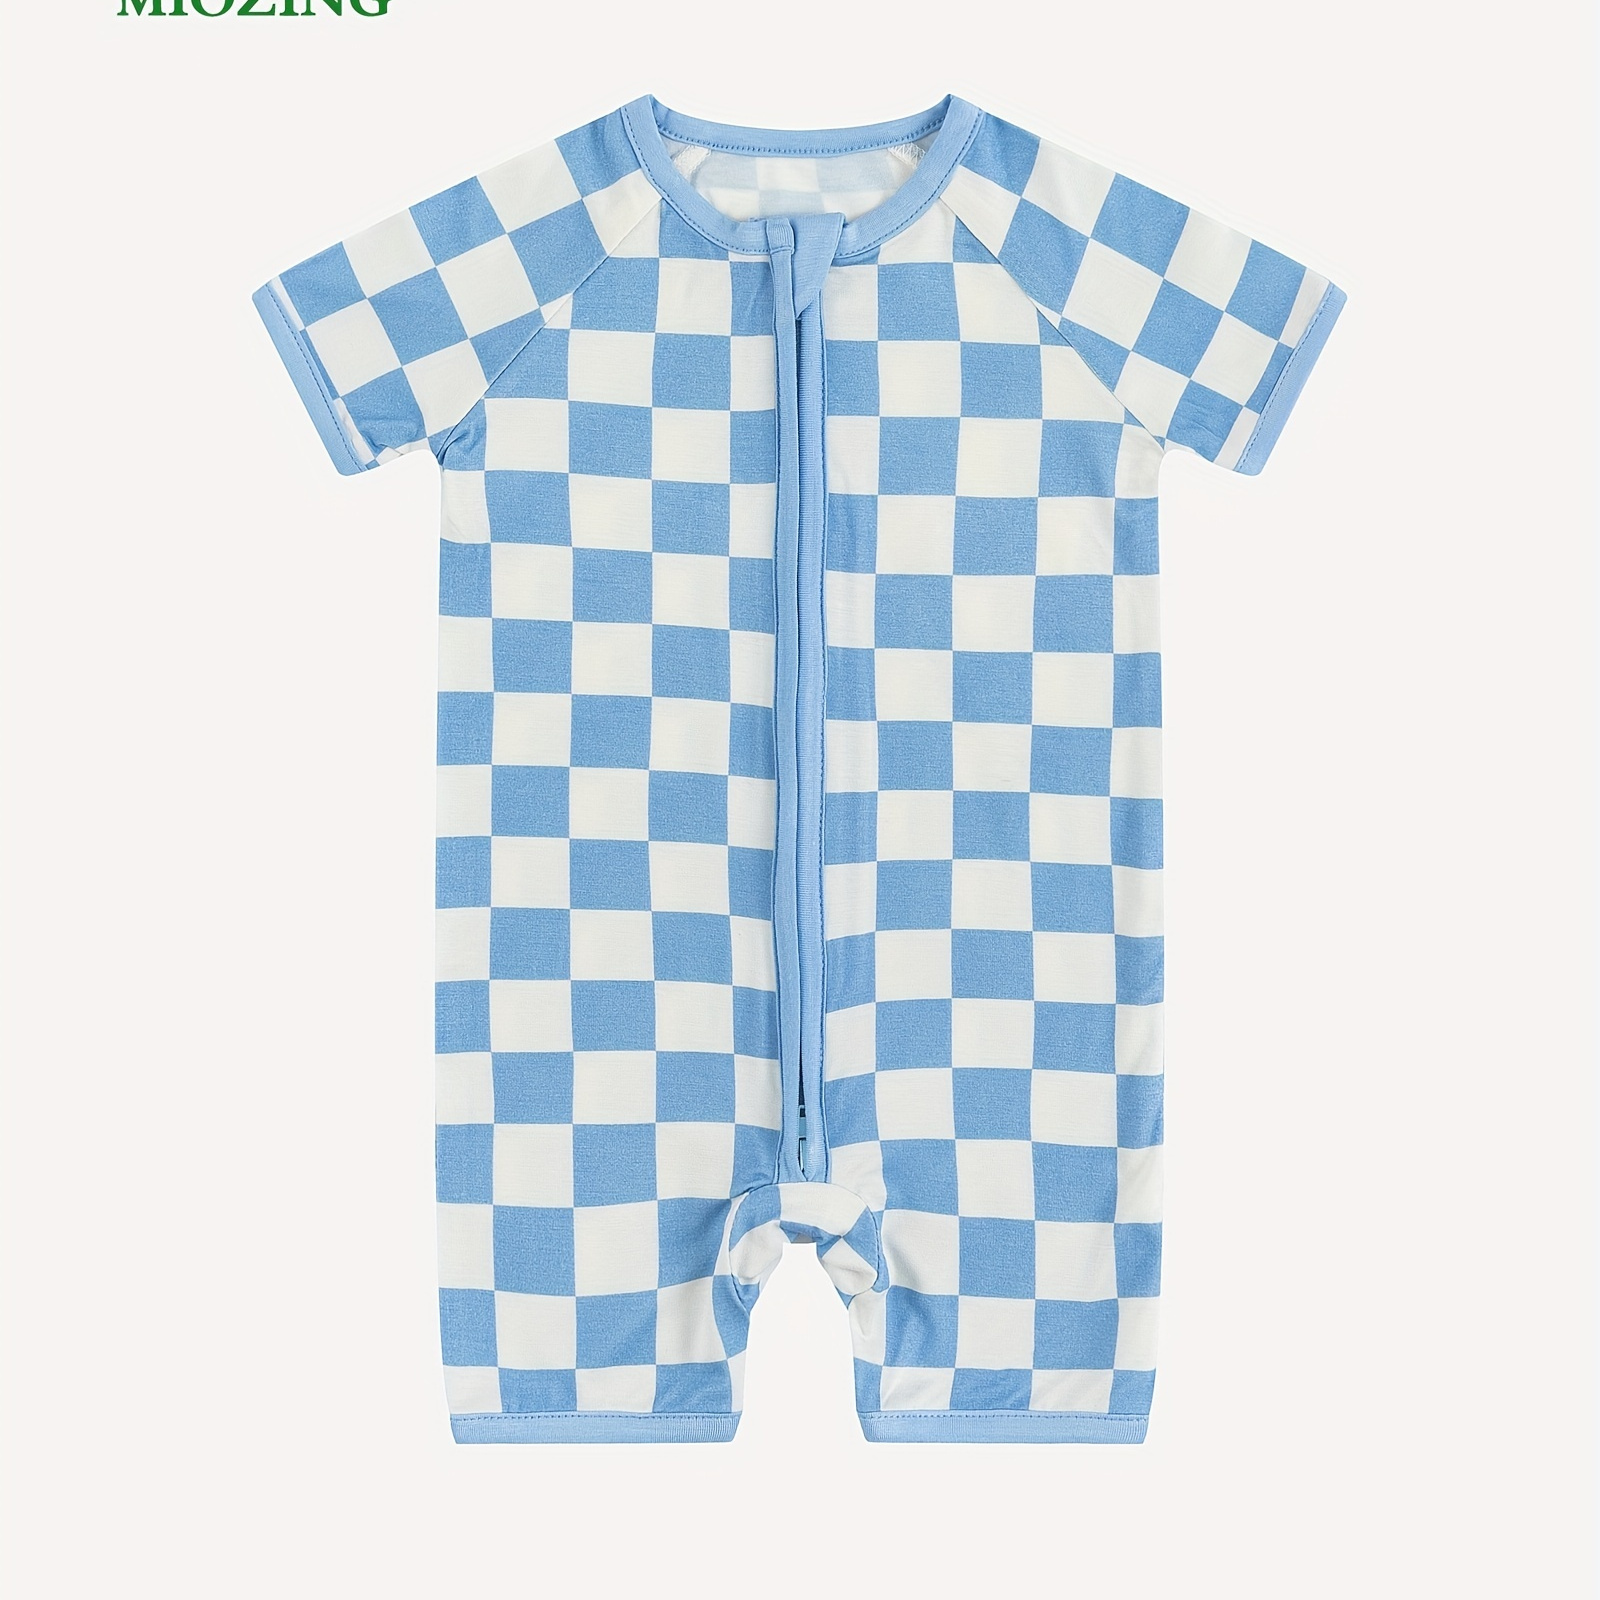 

Miozing Newborn Baby Bamboo Fabric Blue Checkerboard Print Short Sleeve Zipper Bodysuit